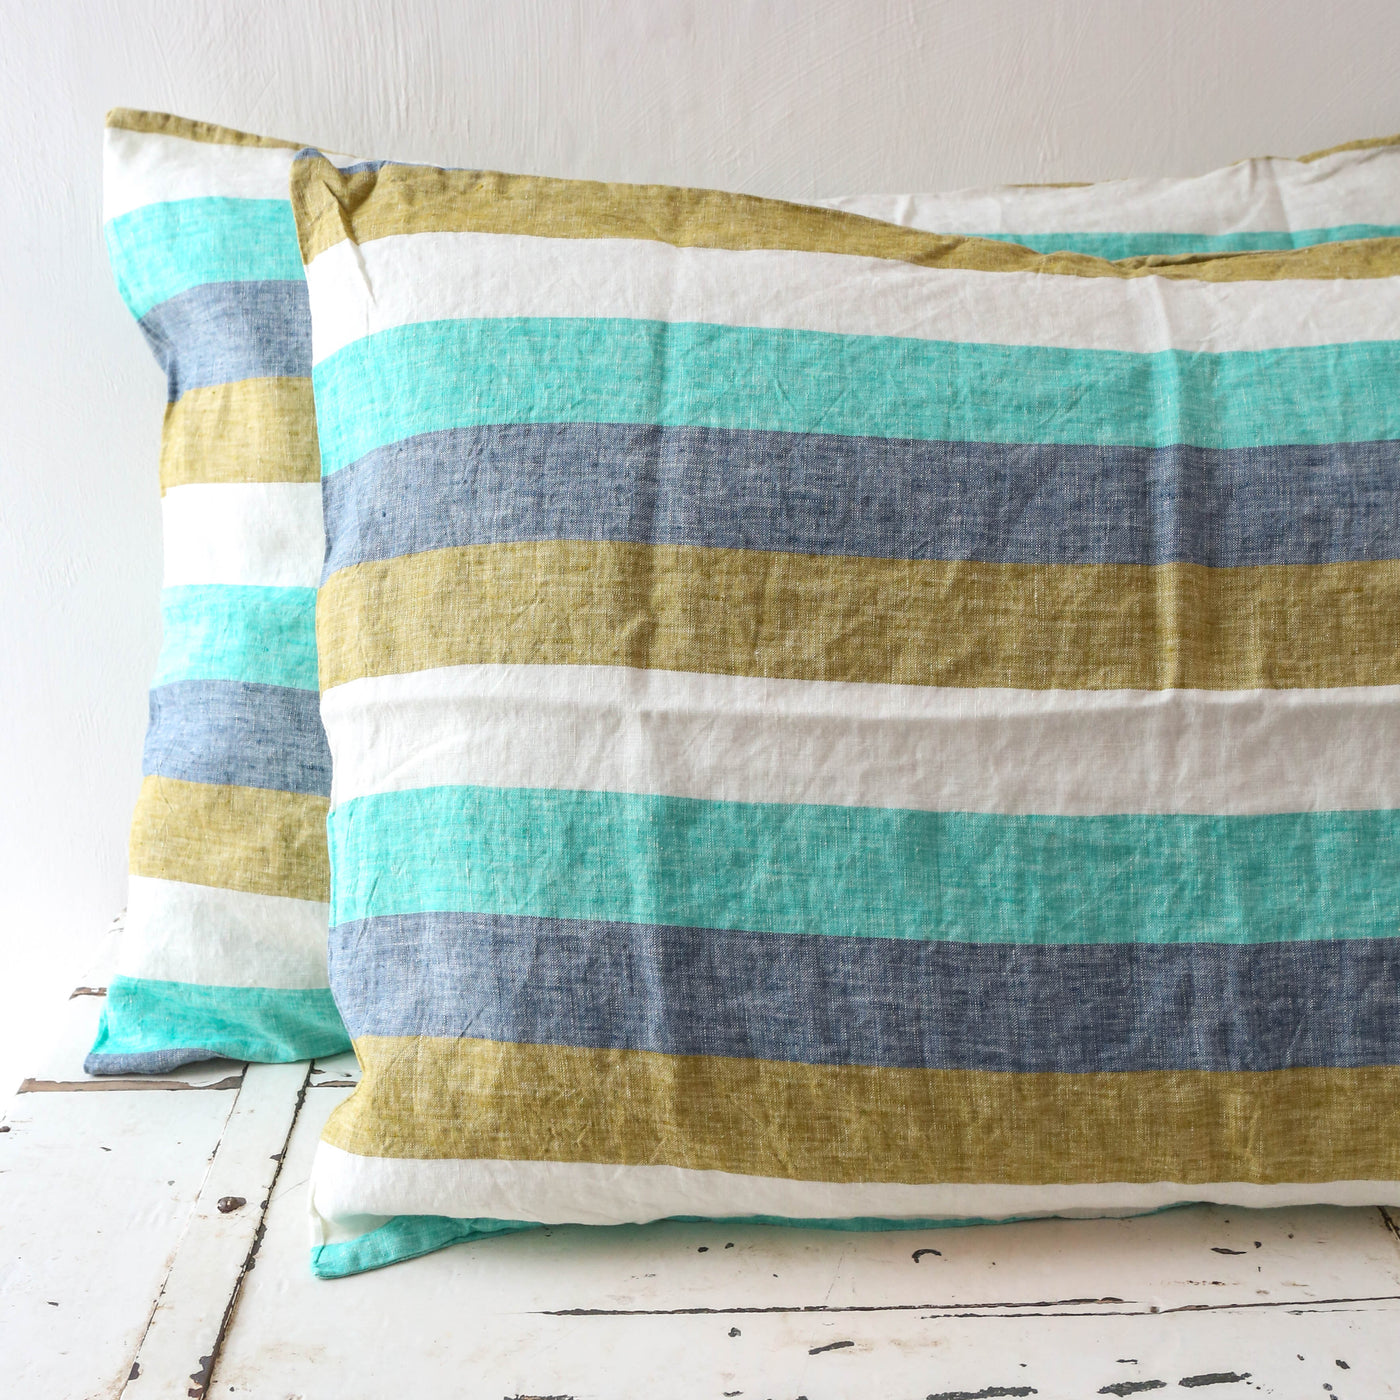 Pair of Linen Pillowcases - Lagoon Stripe